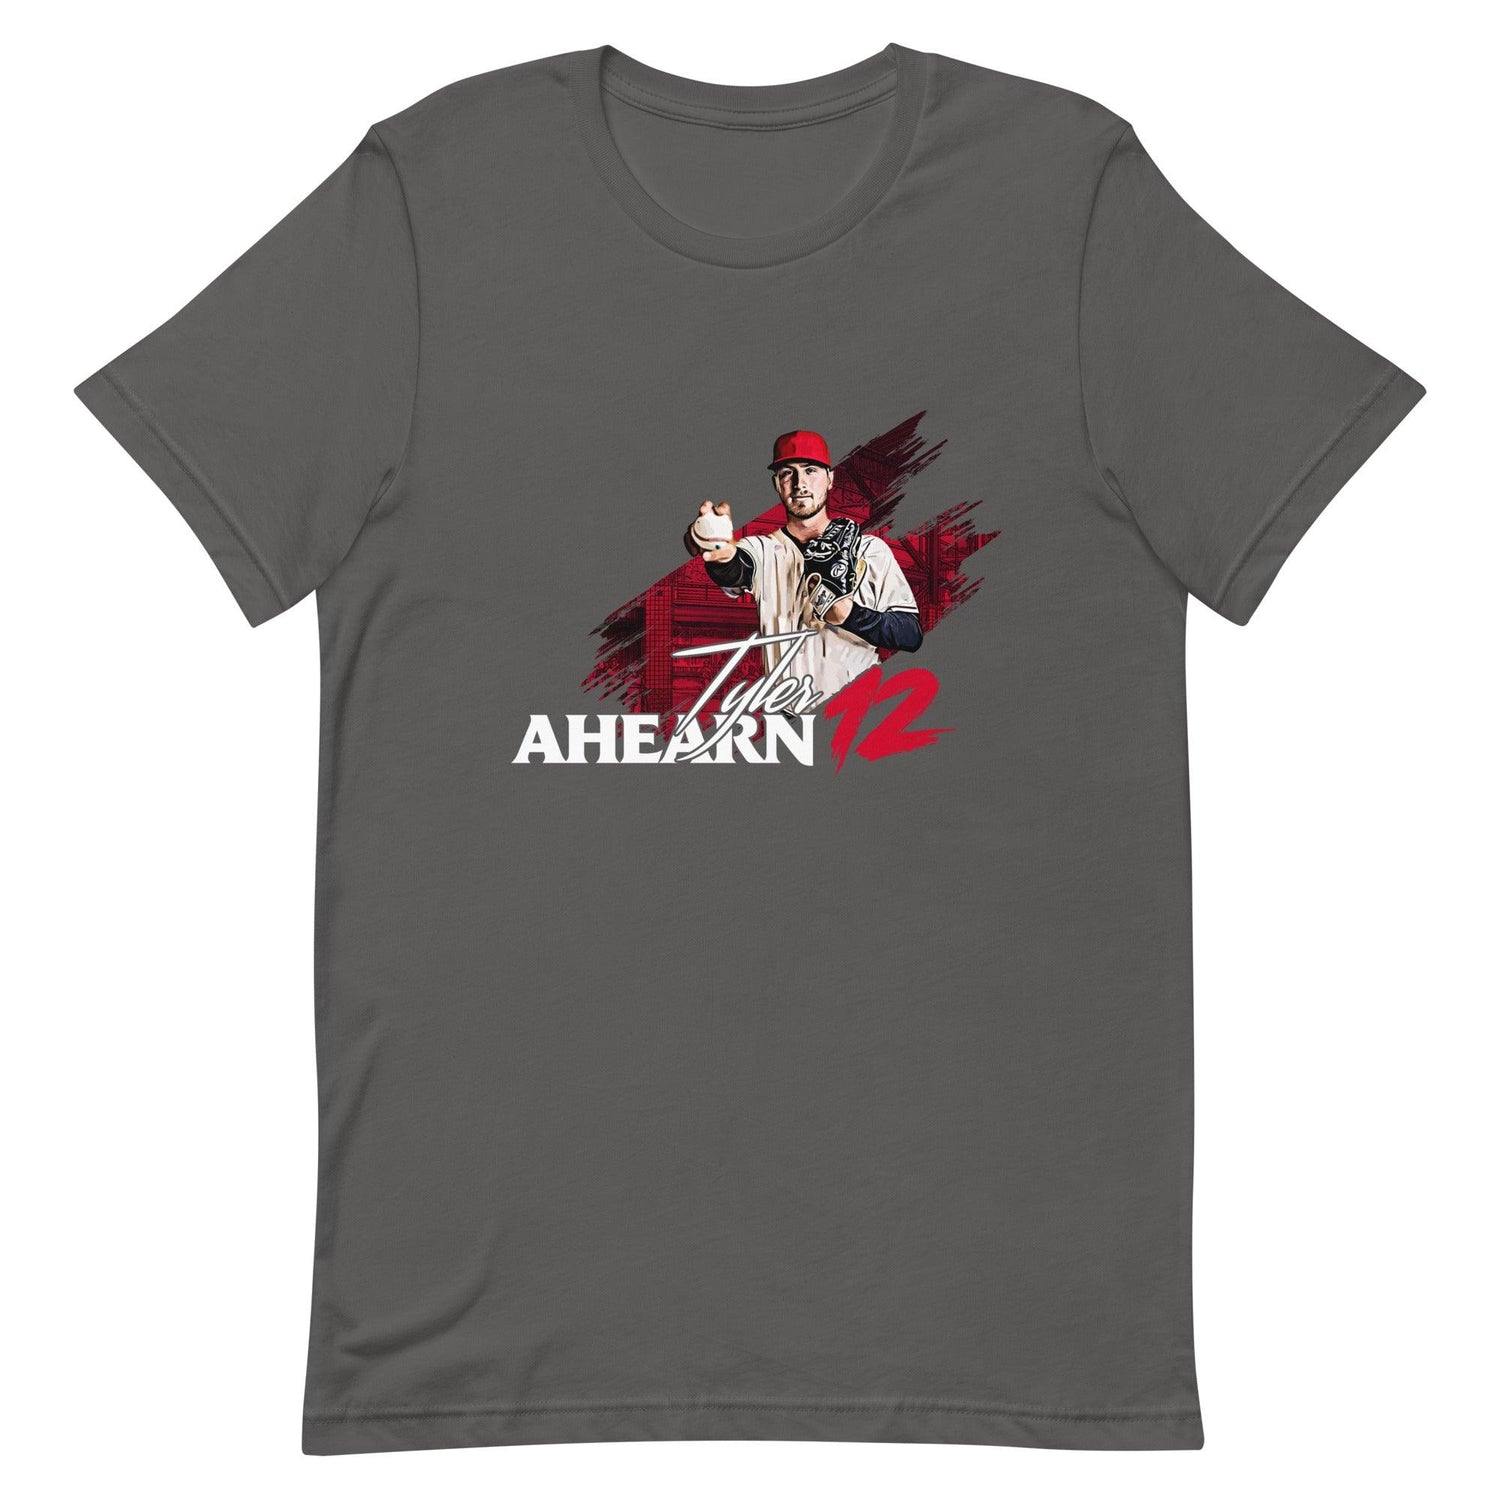 Tyler Ahearn “Essential” t-shirt - Fan Arch